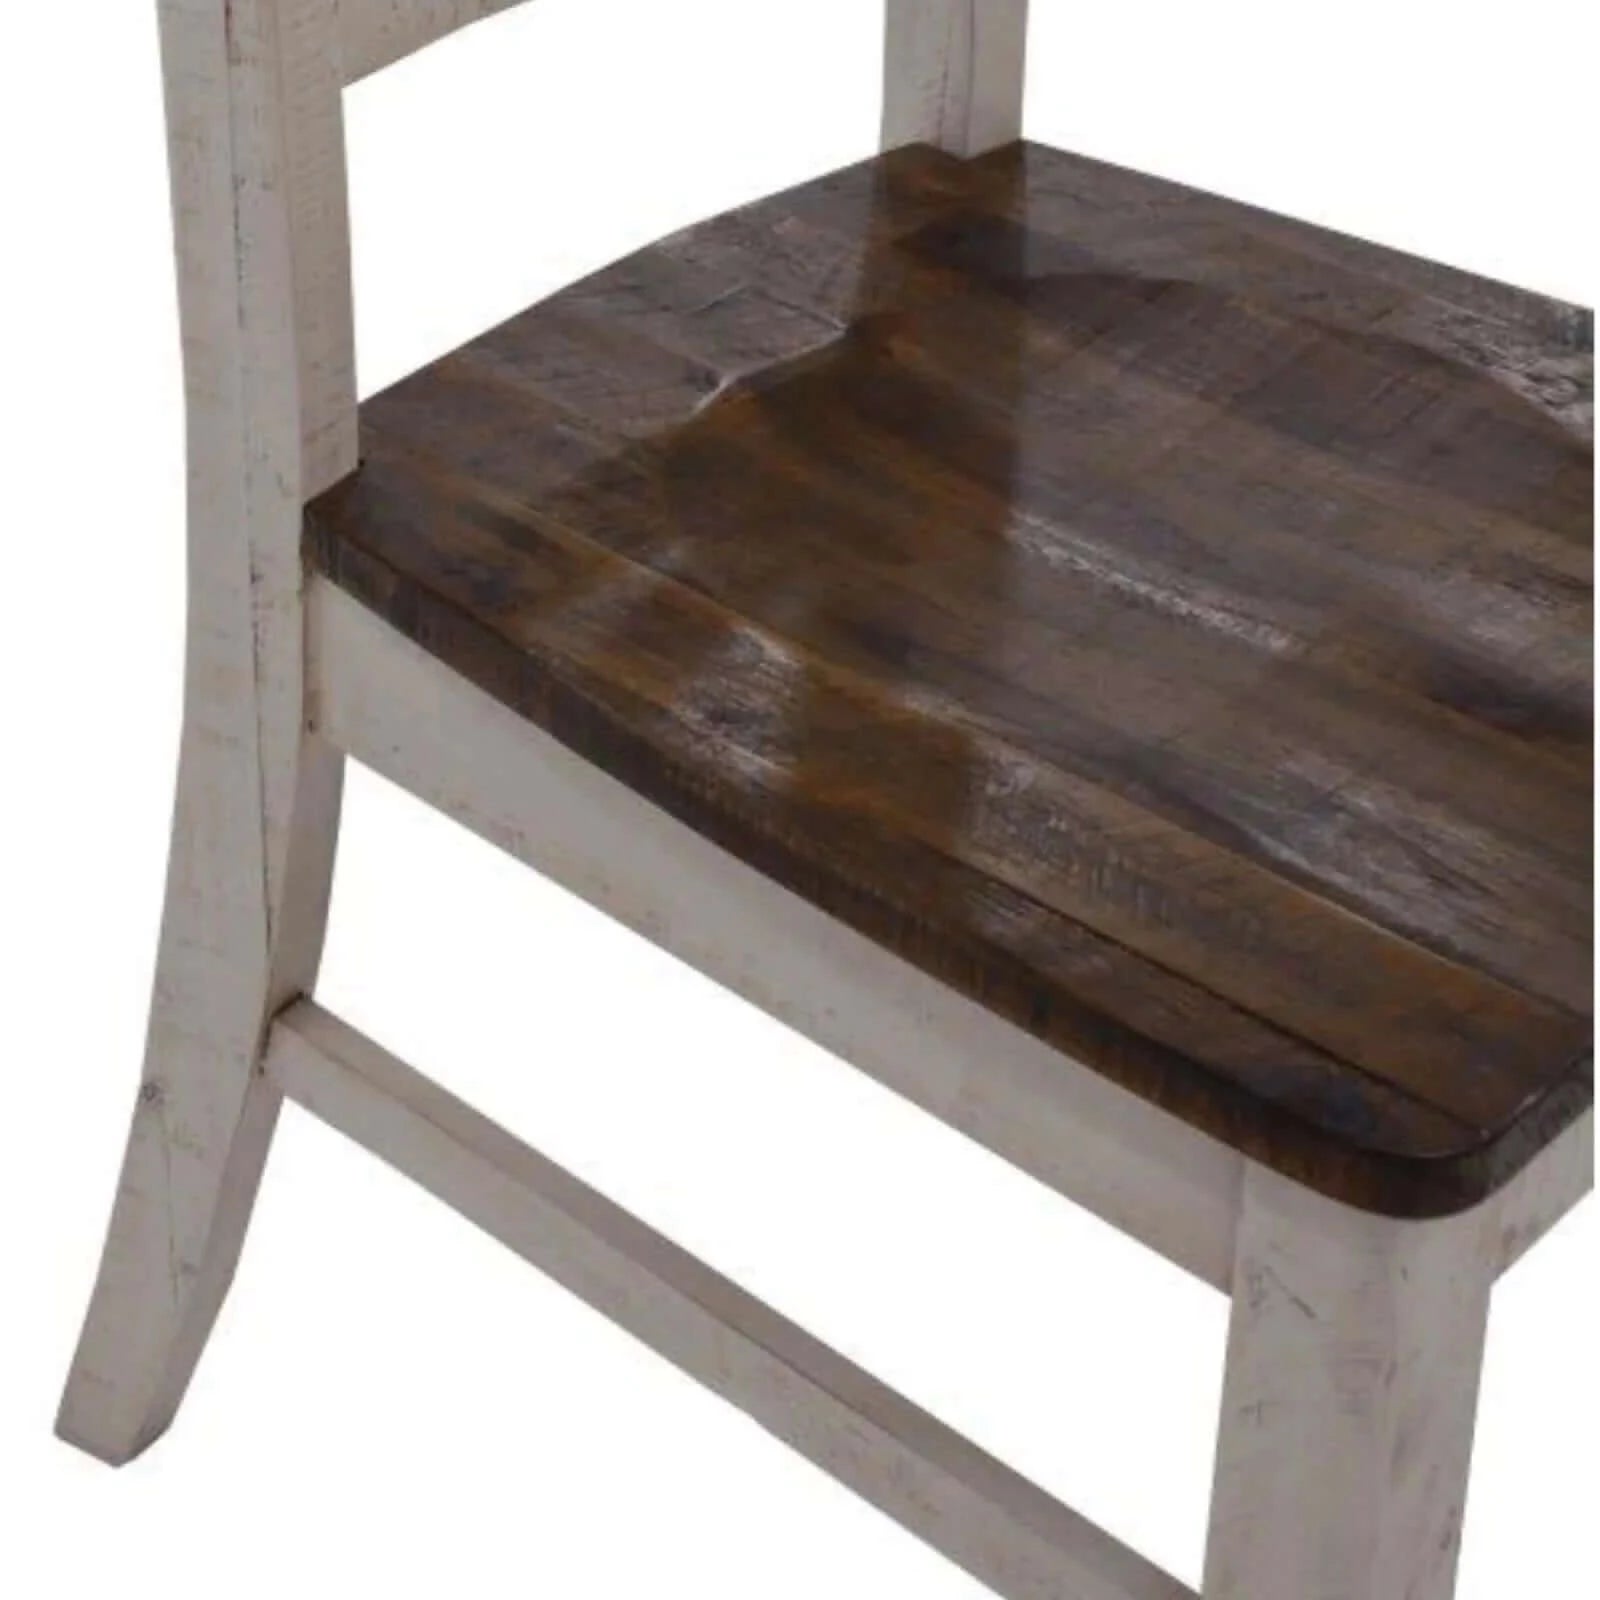 Buy erica x-back dining chair set of 4 solid acacia timber wood hampton brown white - upinteriors-Upinteriors